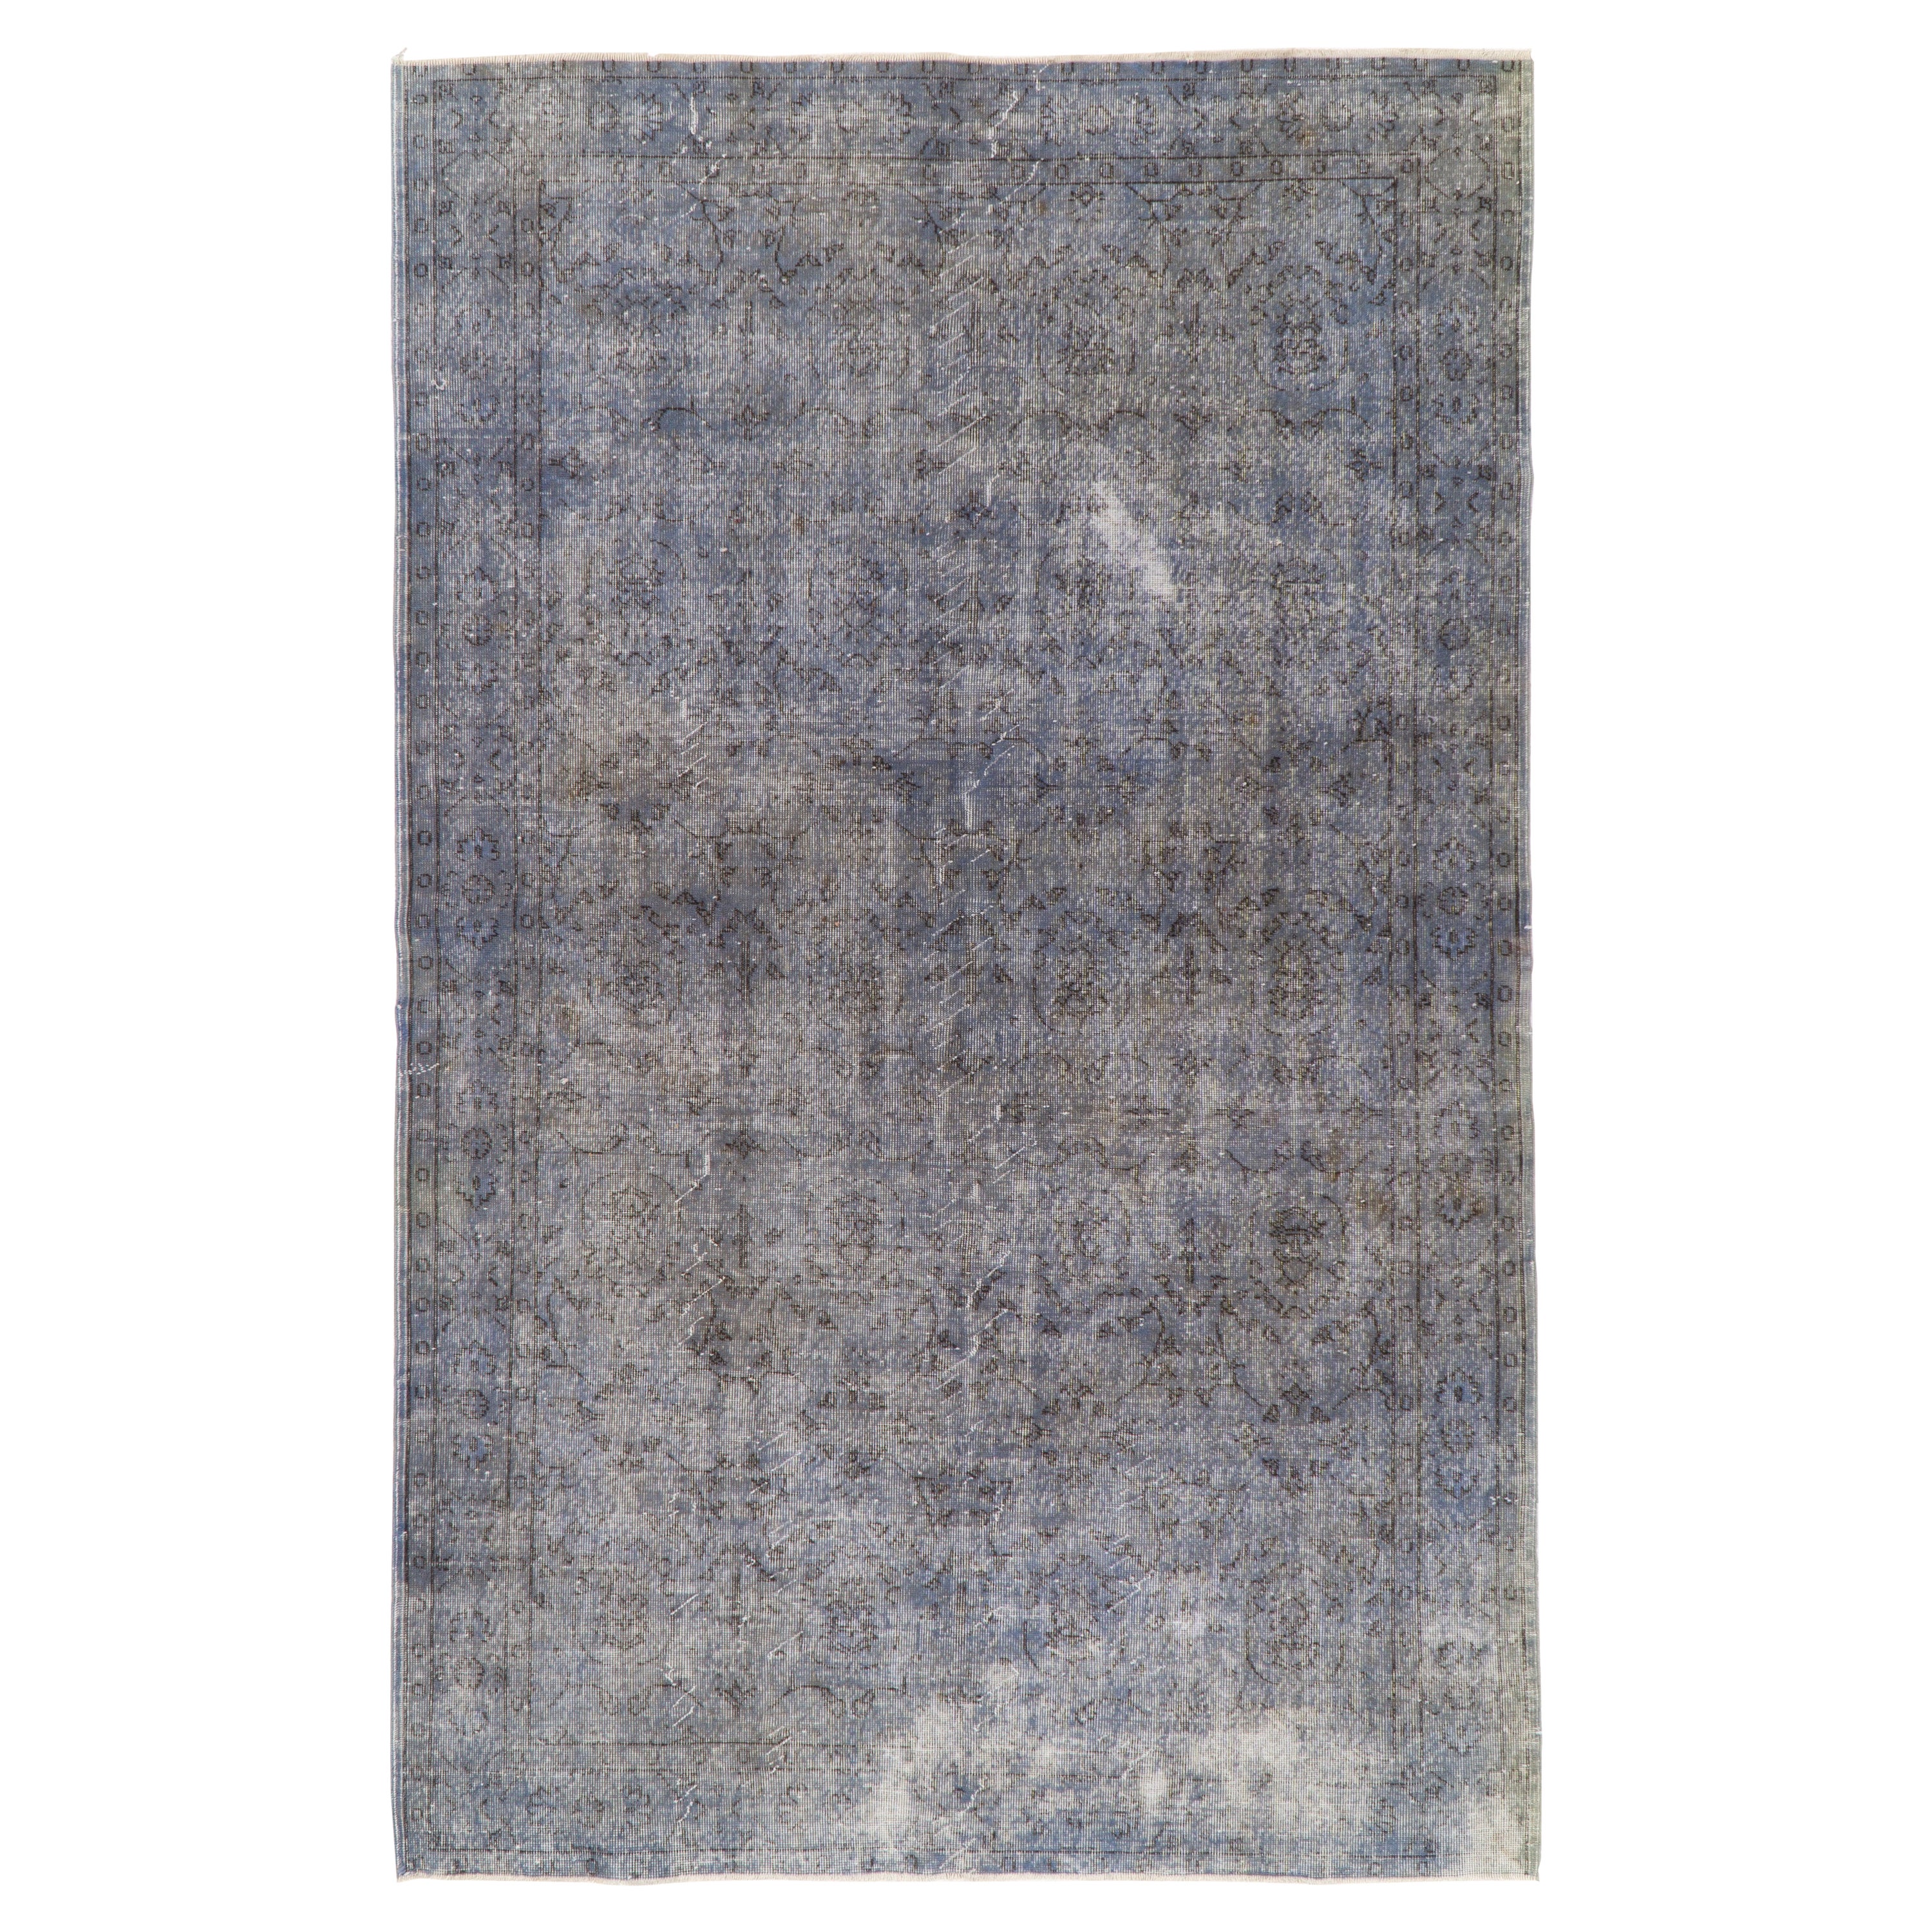 6.4x10.4 Ft Distressed Vintage Turkish Area Rug, Contemporary Light Blue Carpet For Sale